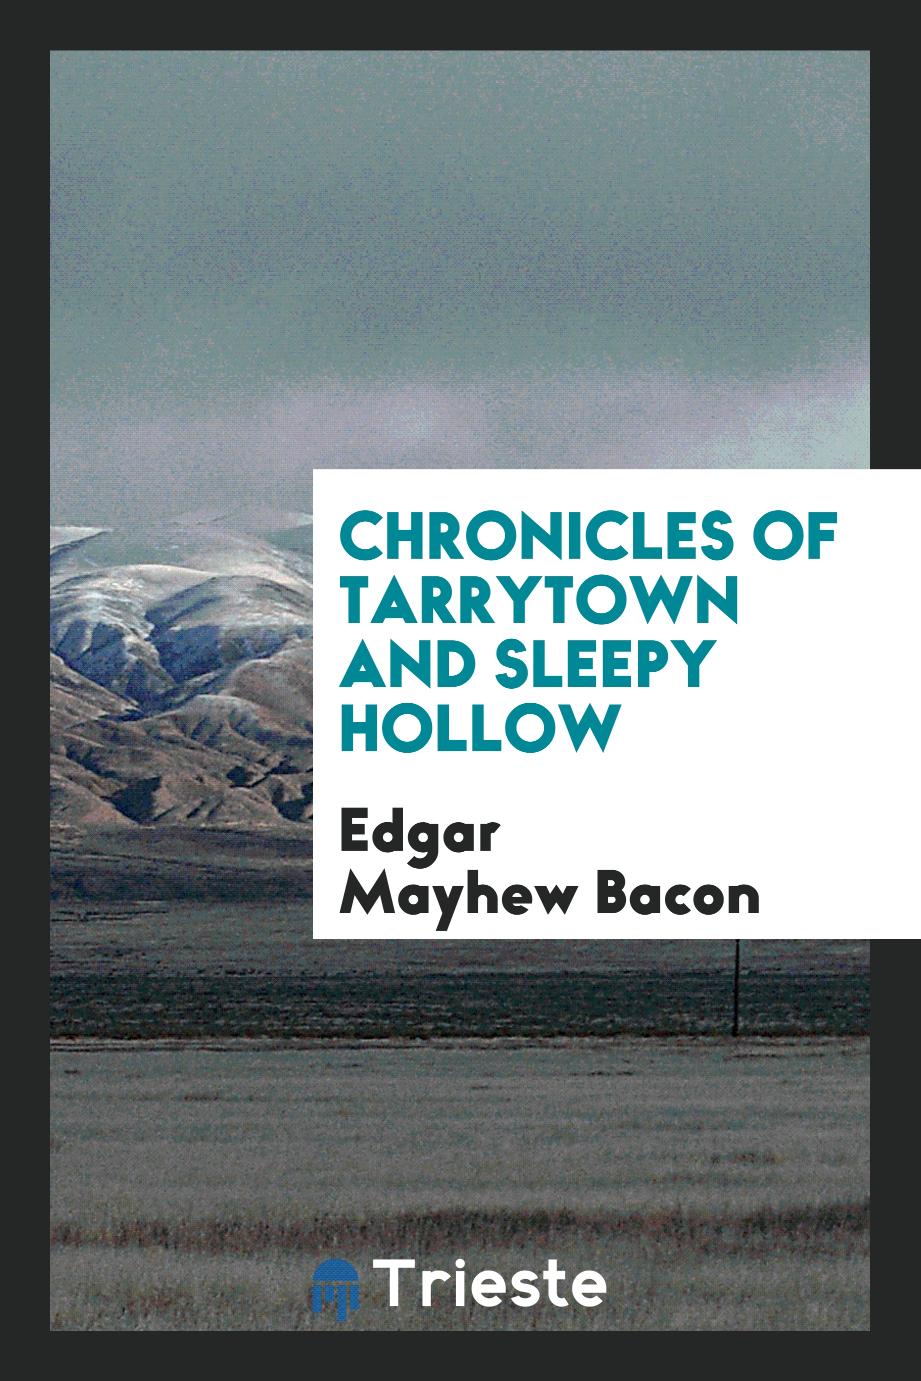 Edgar Mayhew Bacon - Chronicles of Tarrytown and Sleepy Hollow